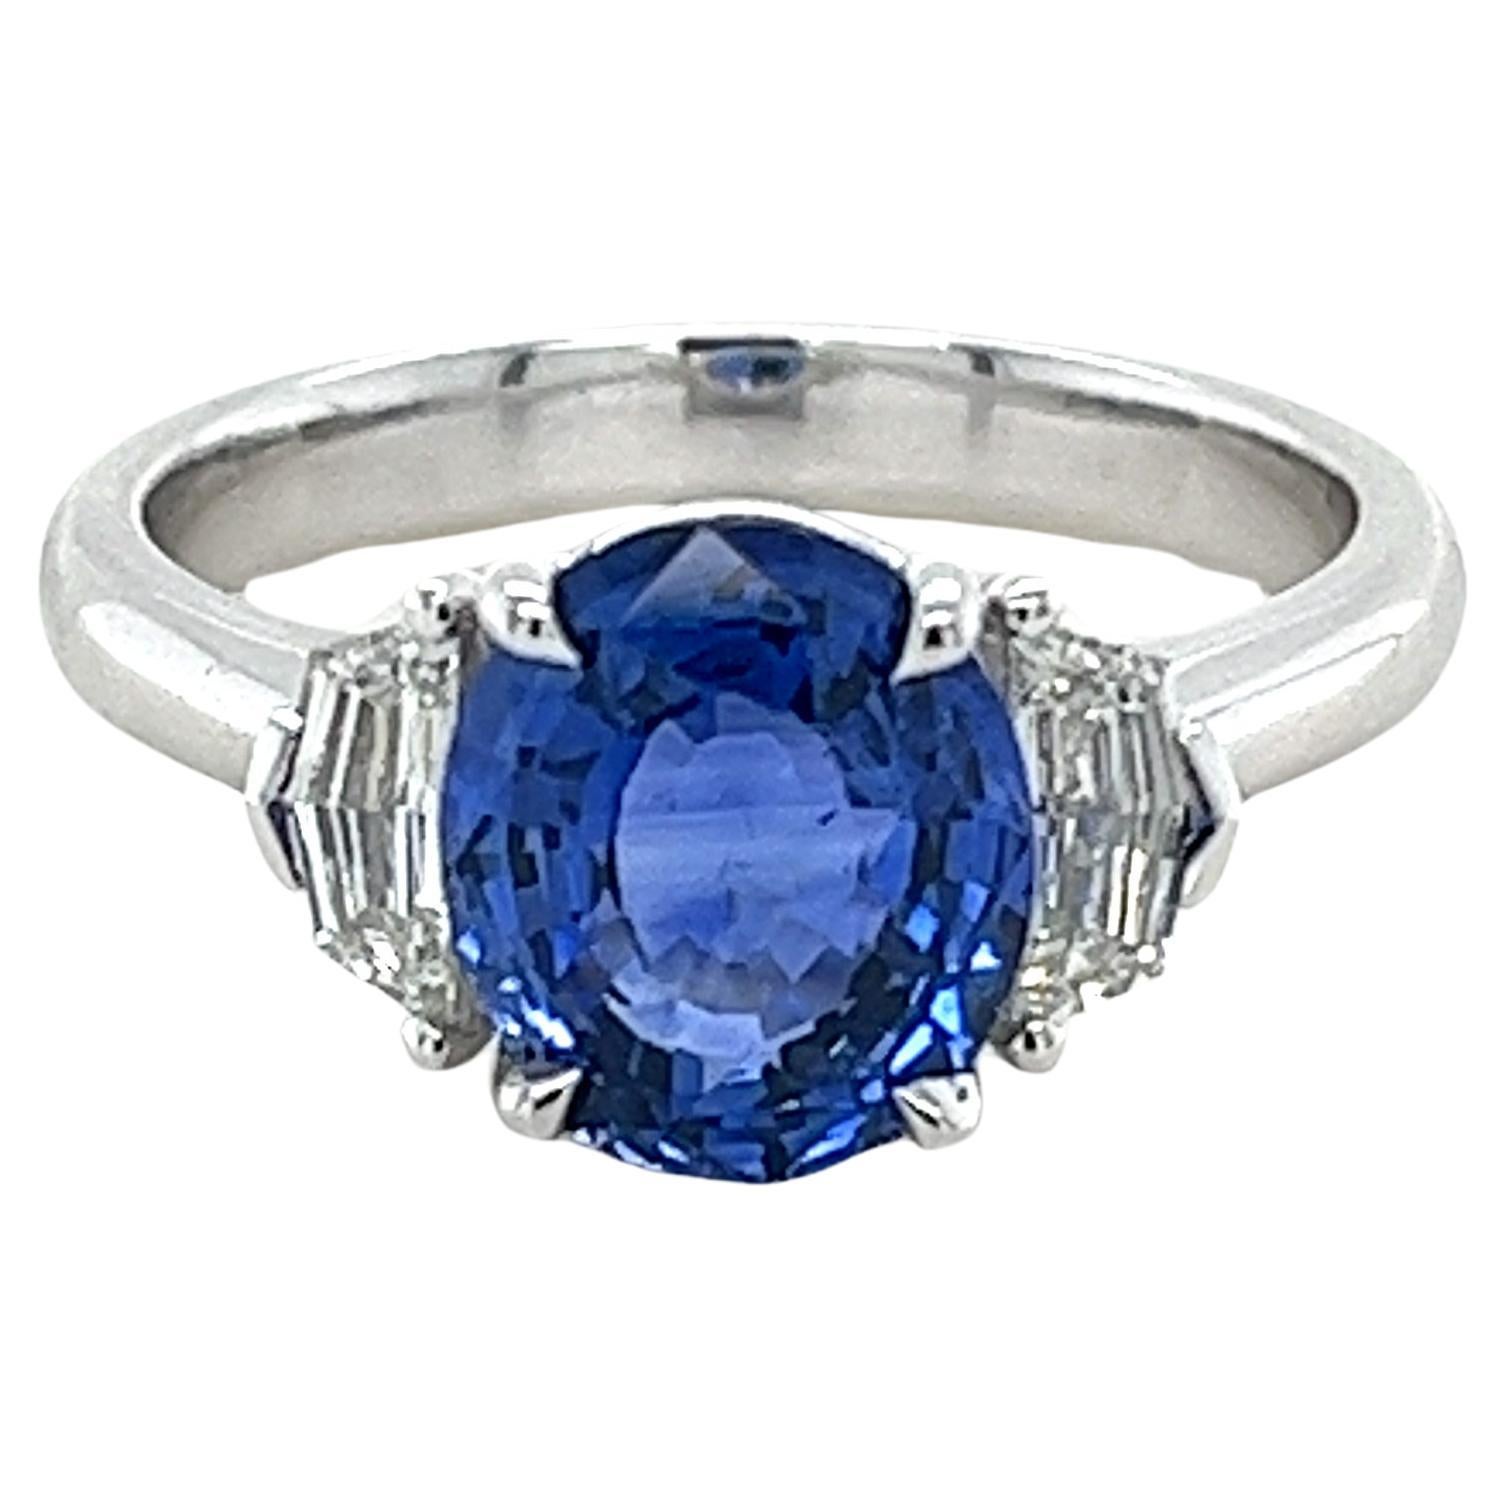 2.75 Carat Ceylon Sapphire & Diamond Ring in Platinum